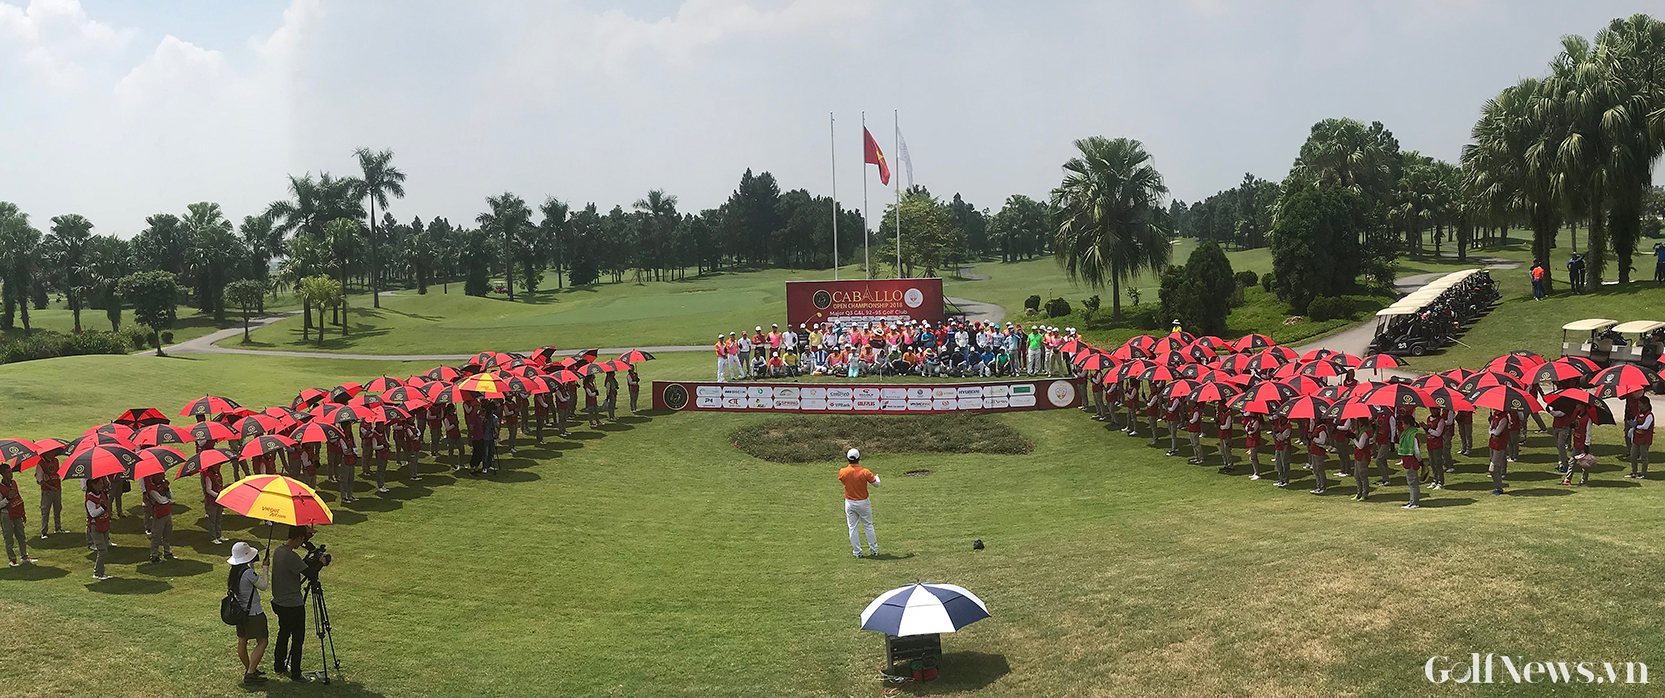 Hơn 200 golfer tham dự giải Caballo Open Championship 2019